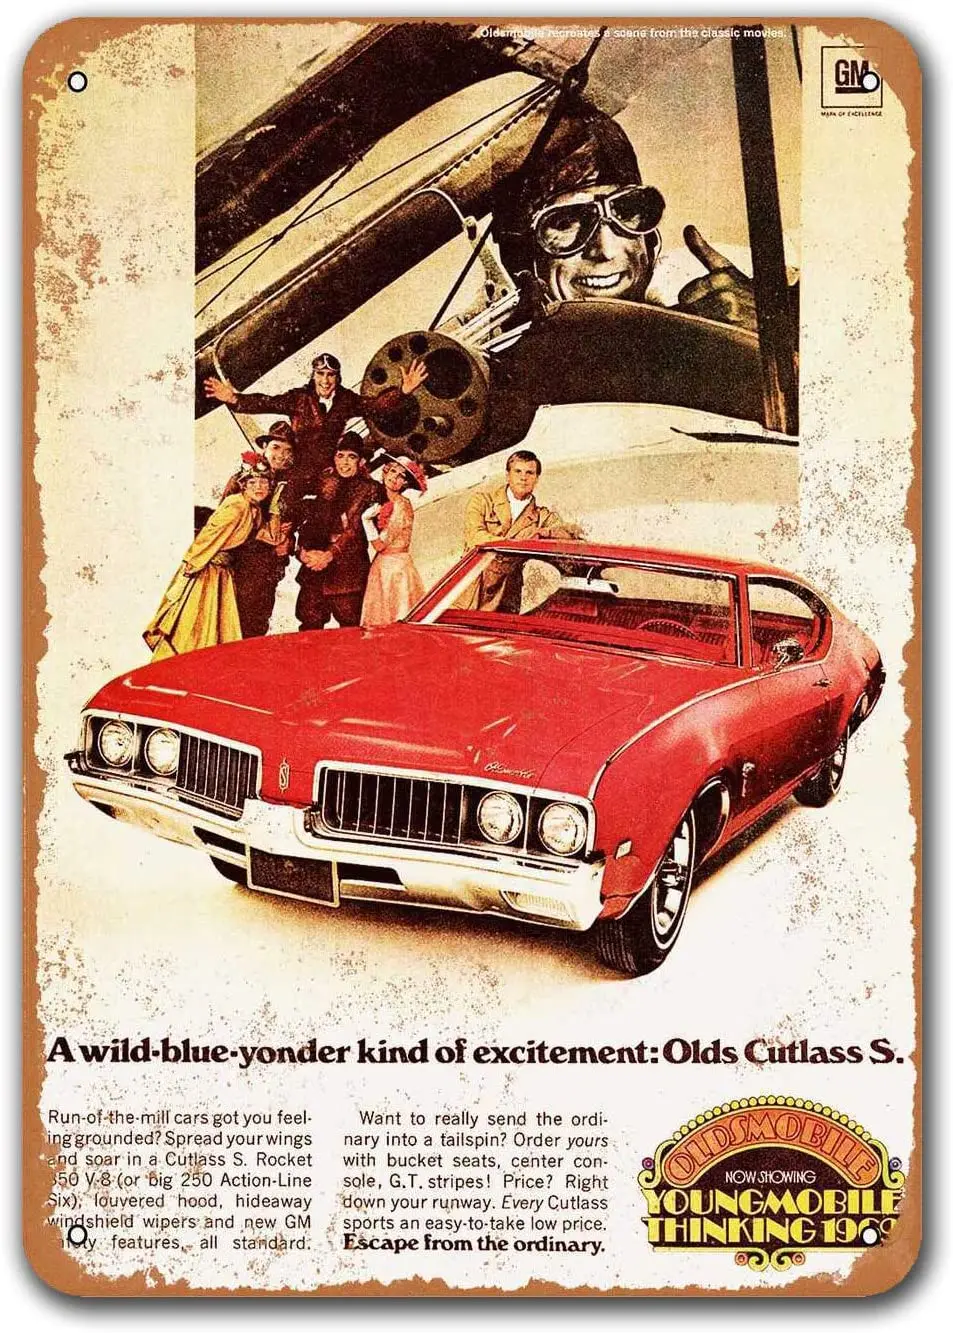 

1969 Oldsmobile Cutlass S Vintage Car Tin Signs, Sisoso Metal Plaques Poster Pub Man Cave Retro Wall Decor 8x12 inch